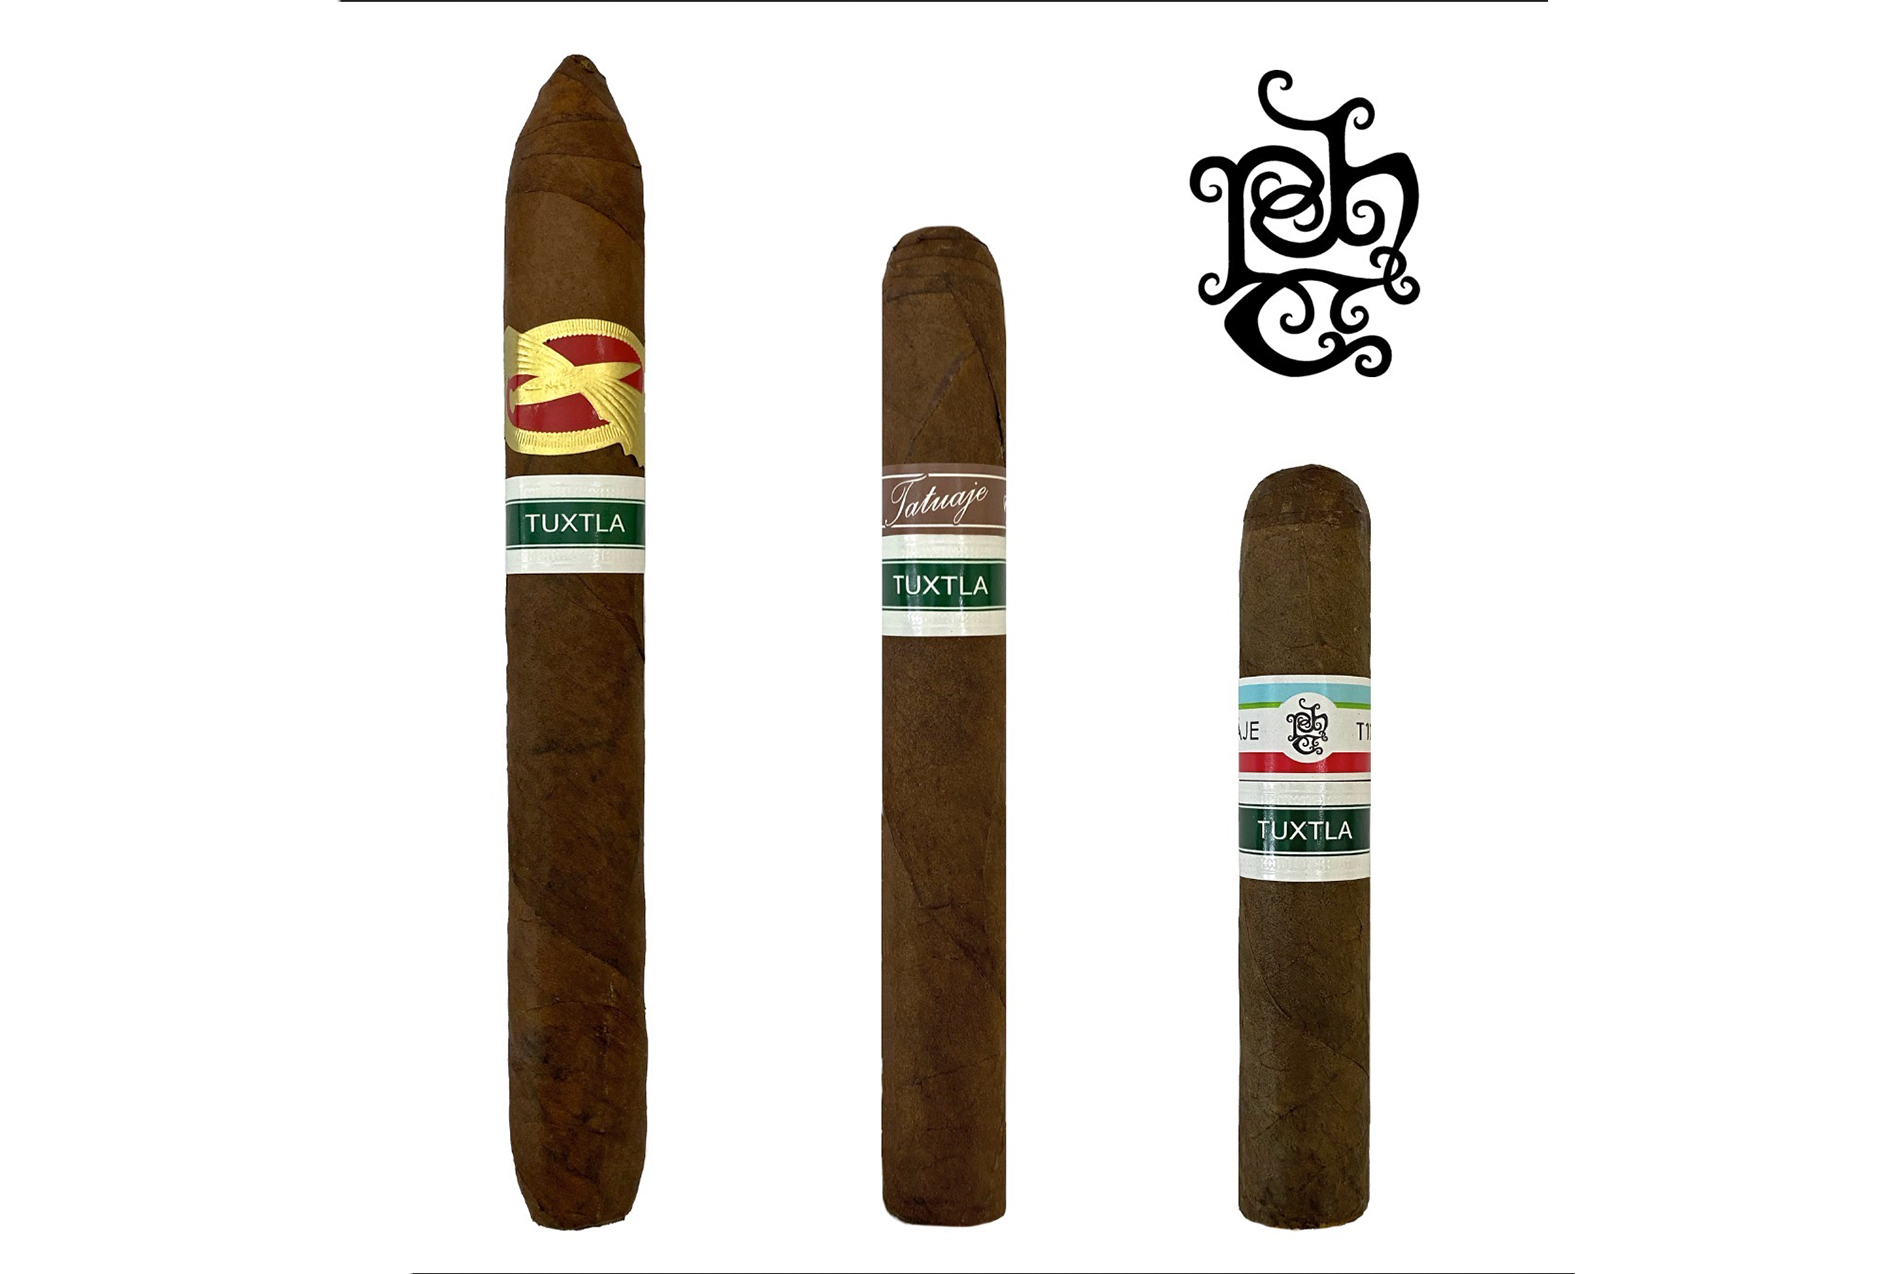 The Newest Project From Tatuaje Cigar: The Tuxtla